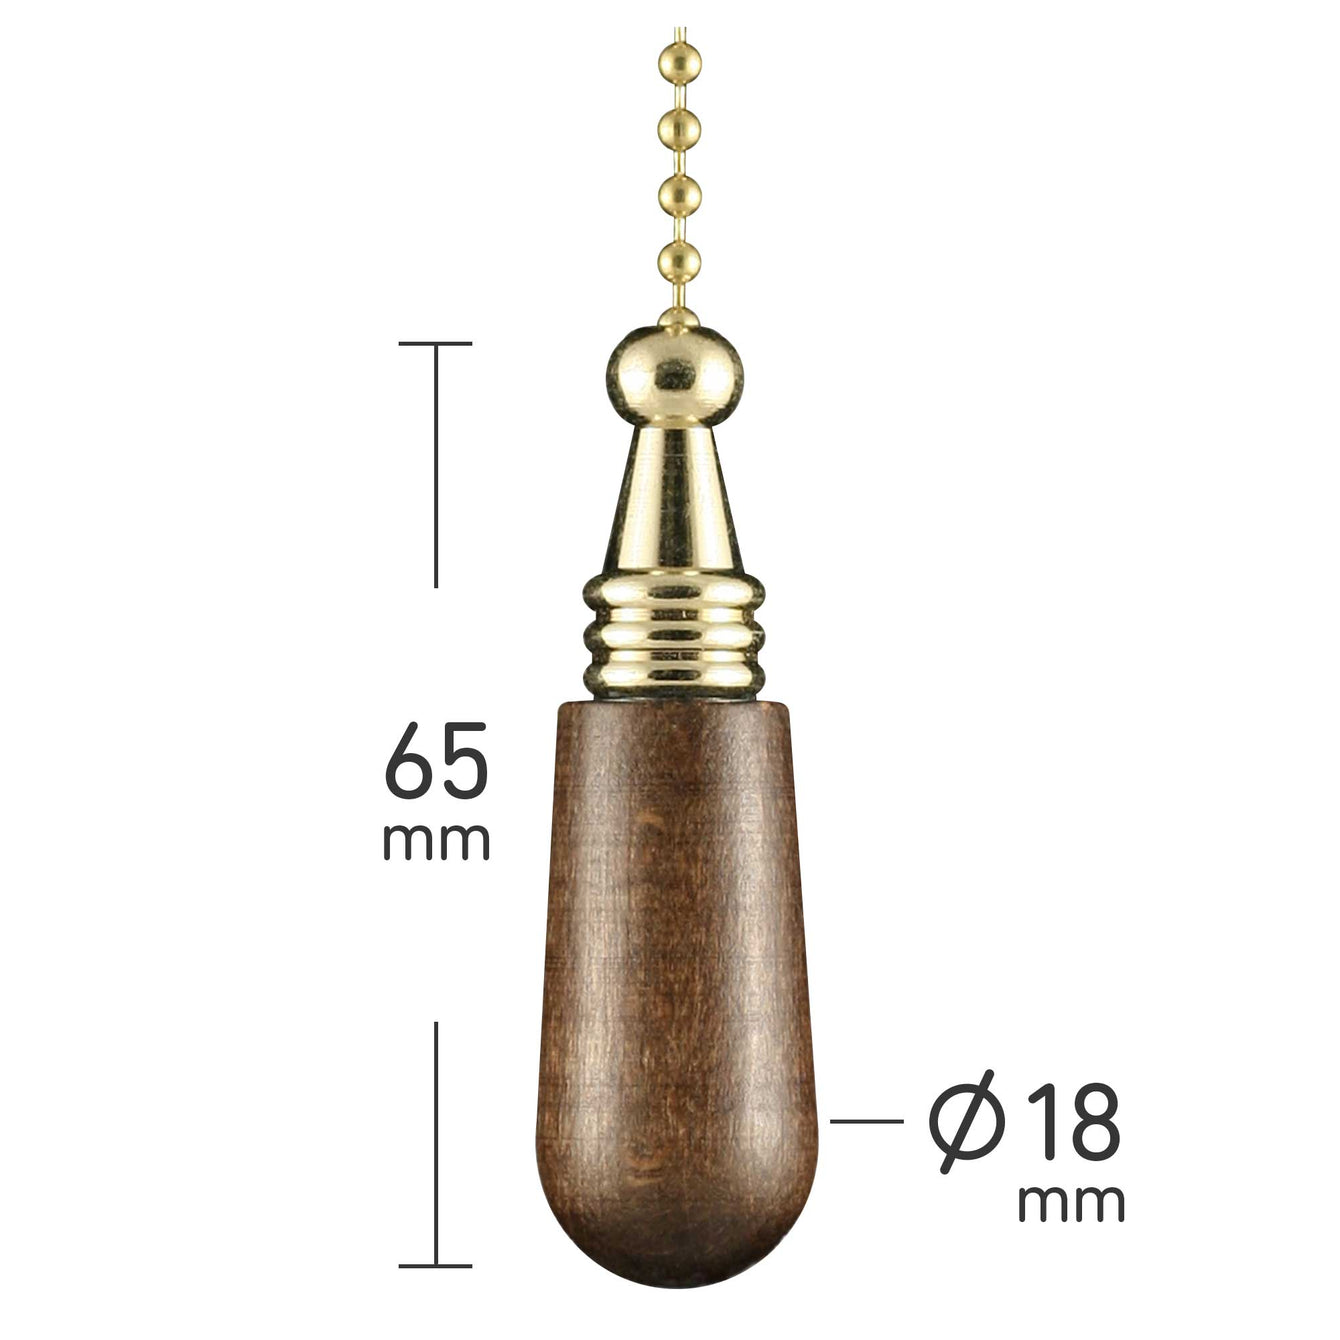 ElekTek Premium Brass Bathroom Light Pull Cord Switch Kit with Pull Chain Handle 